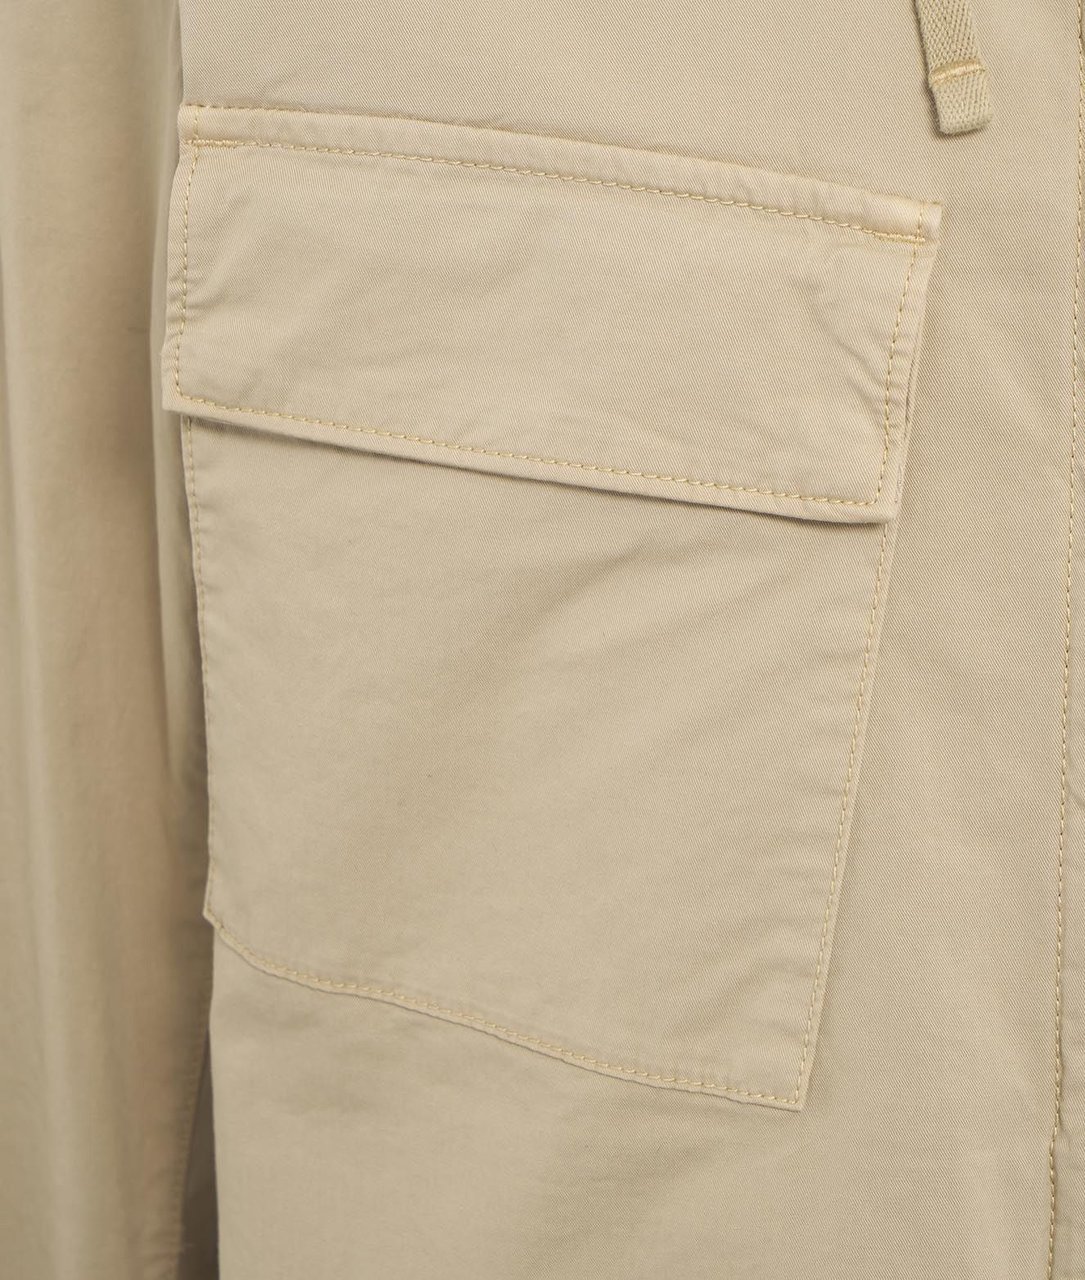 Stone Island Jacket with maxi pockets "Supima Cotton Twill" Beige